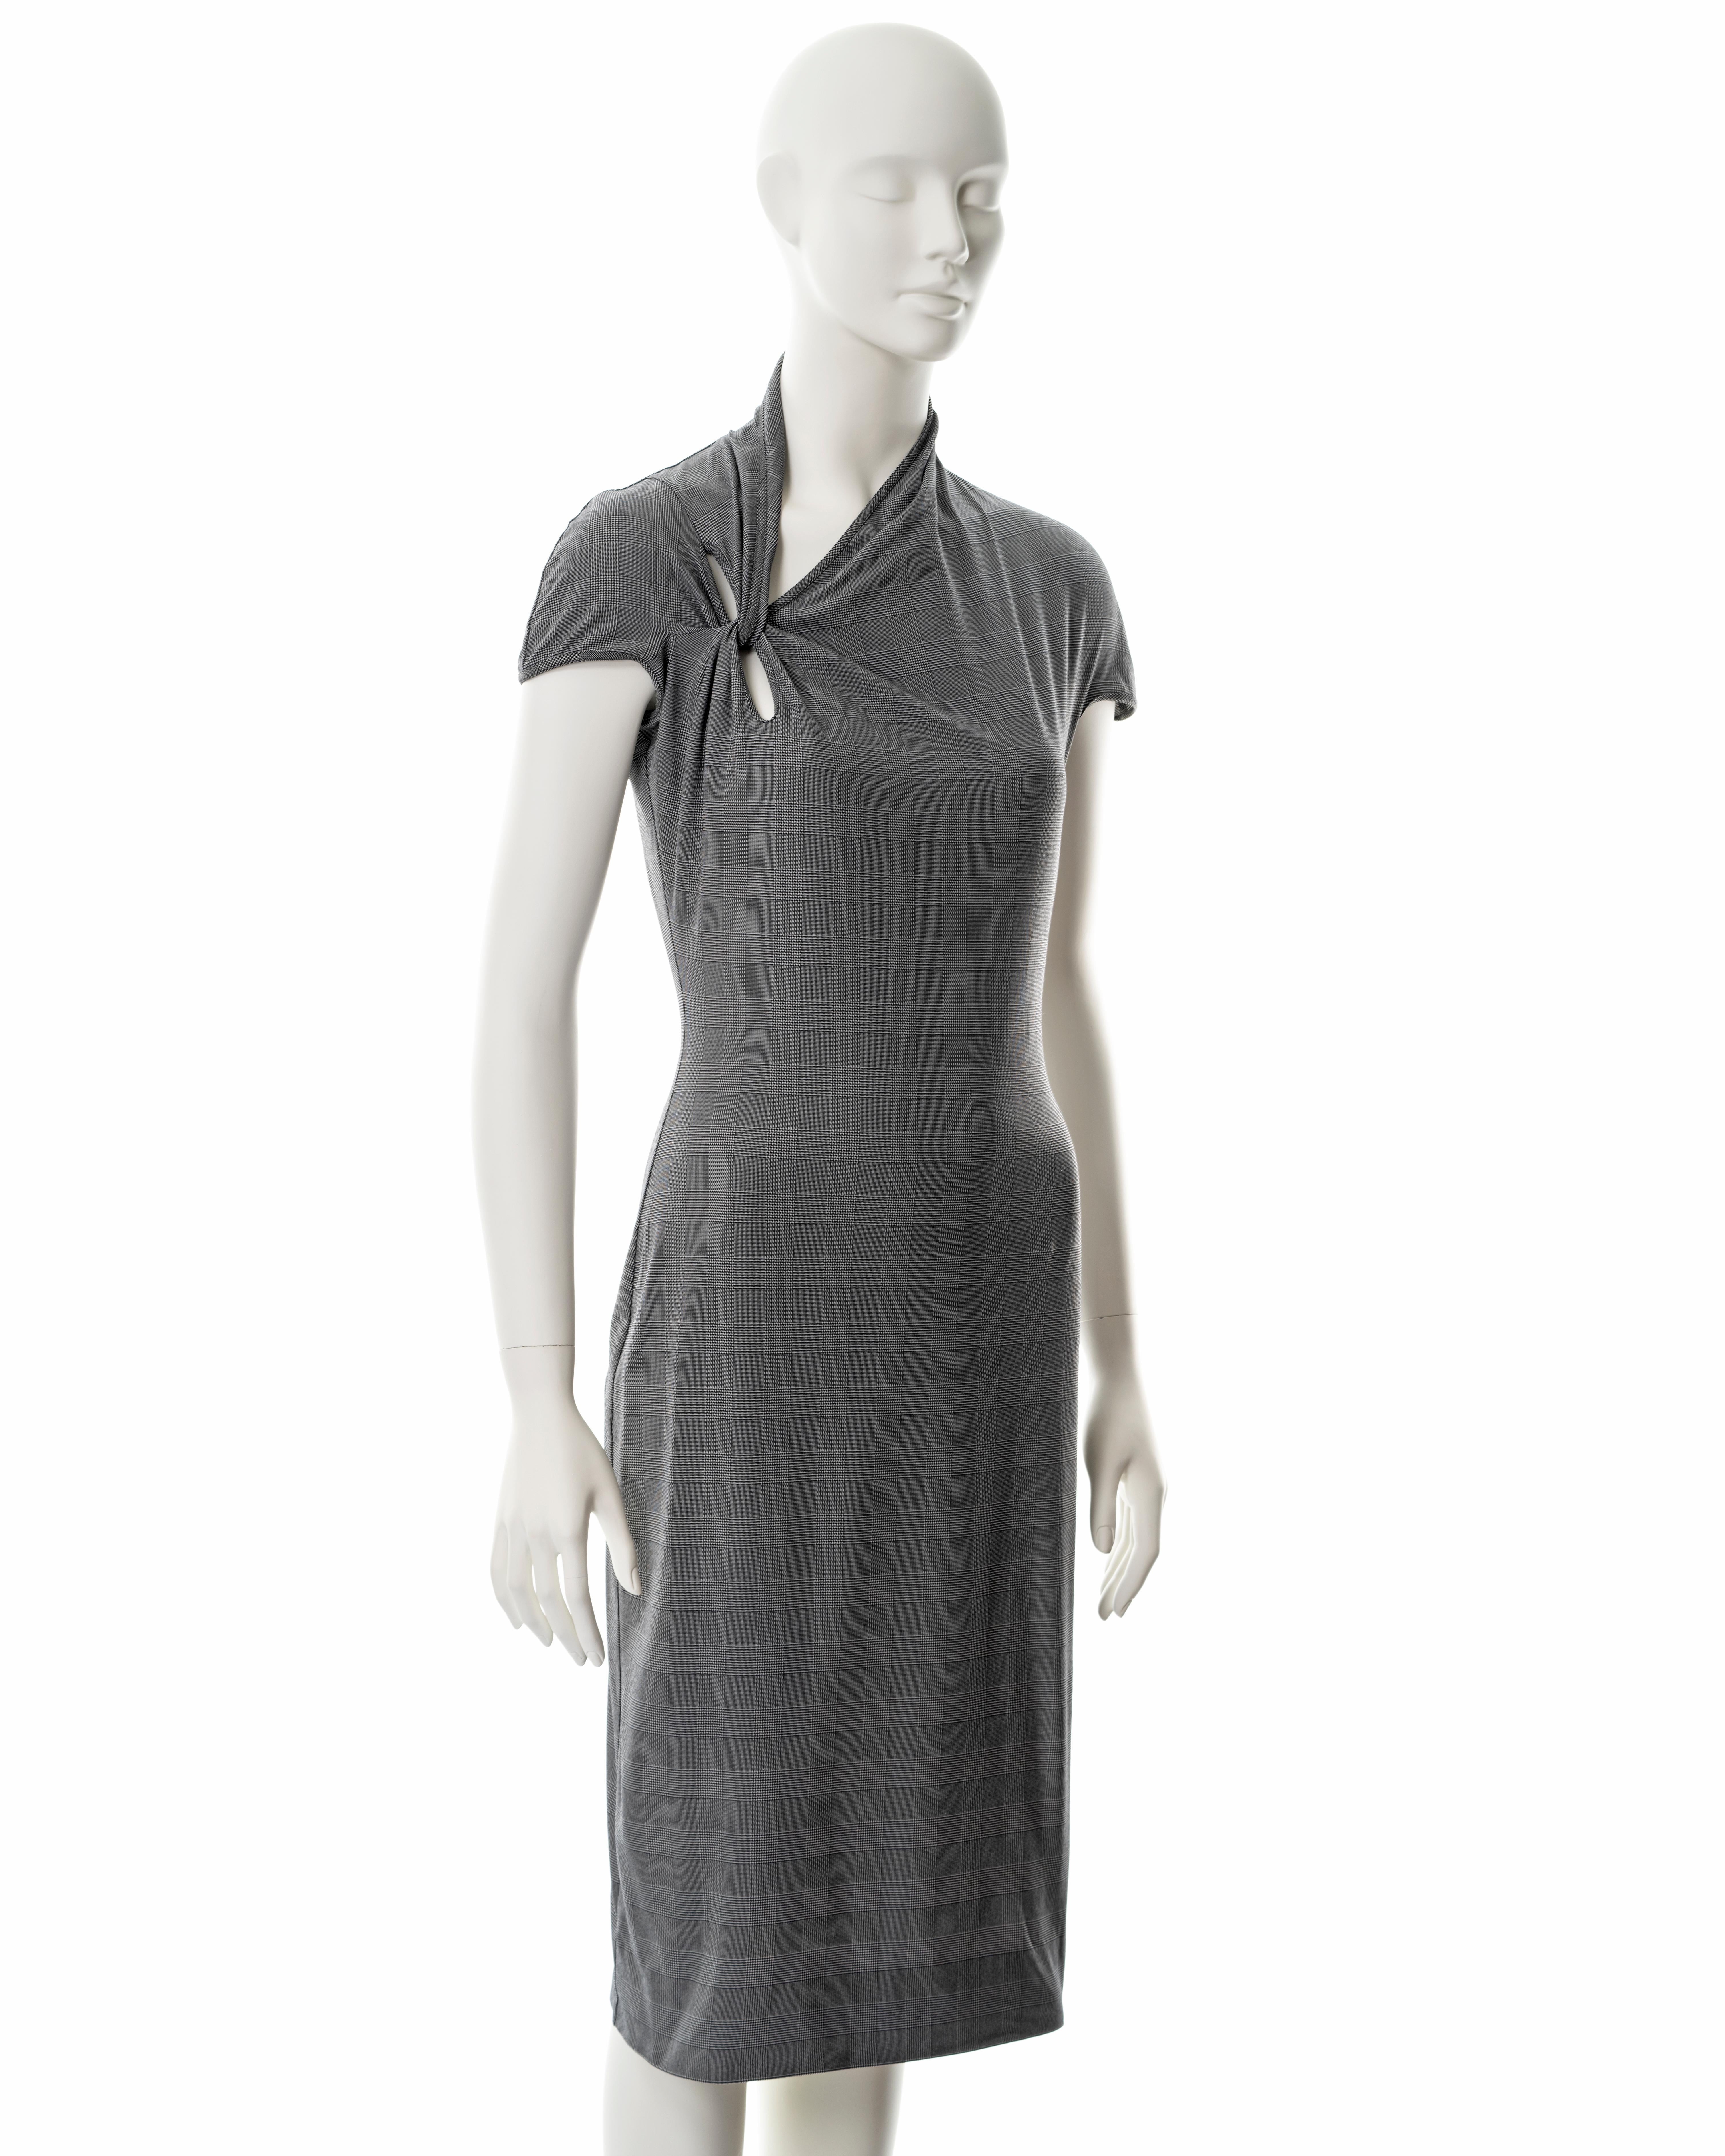 Christian Dior by John Galliano grey checked nylon sheath dress, ss 2000 For Sale 1